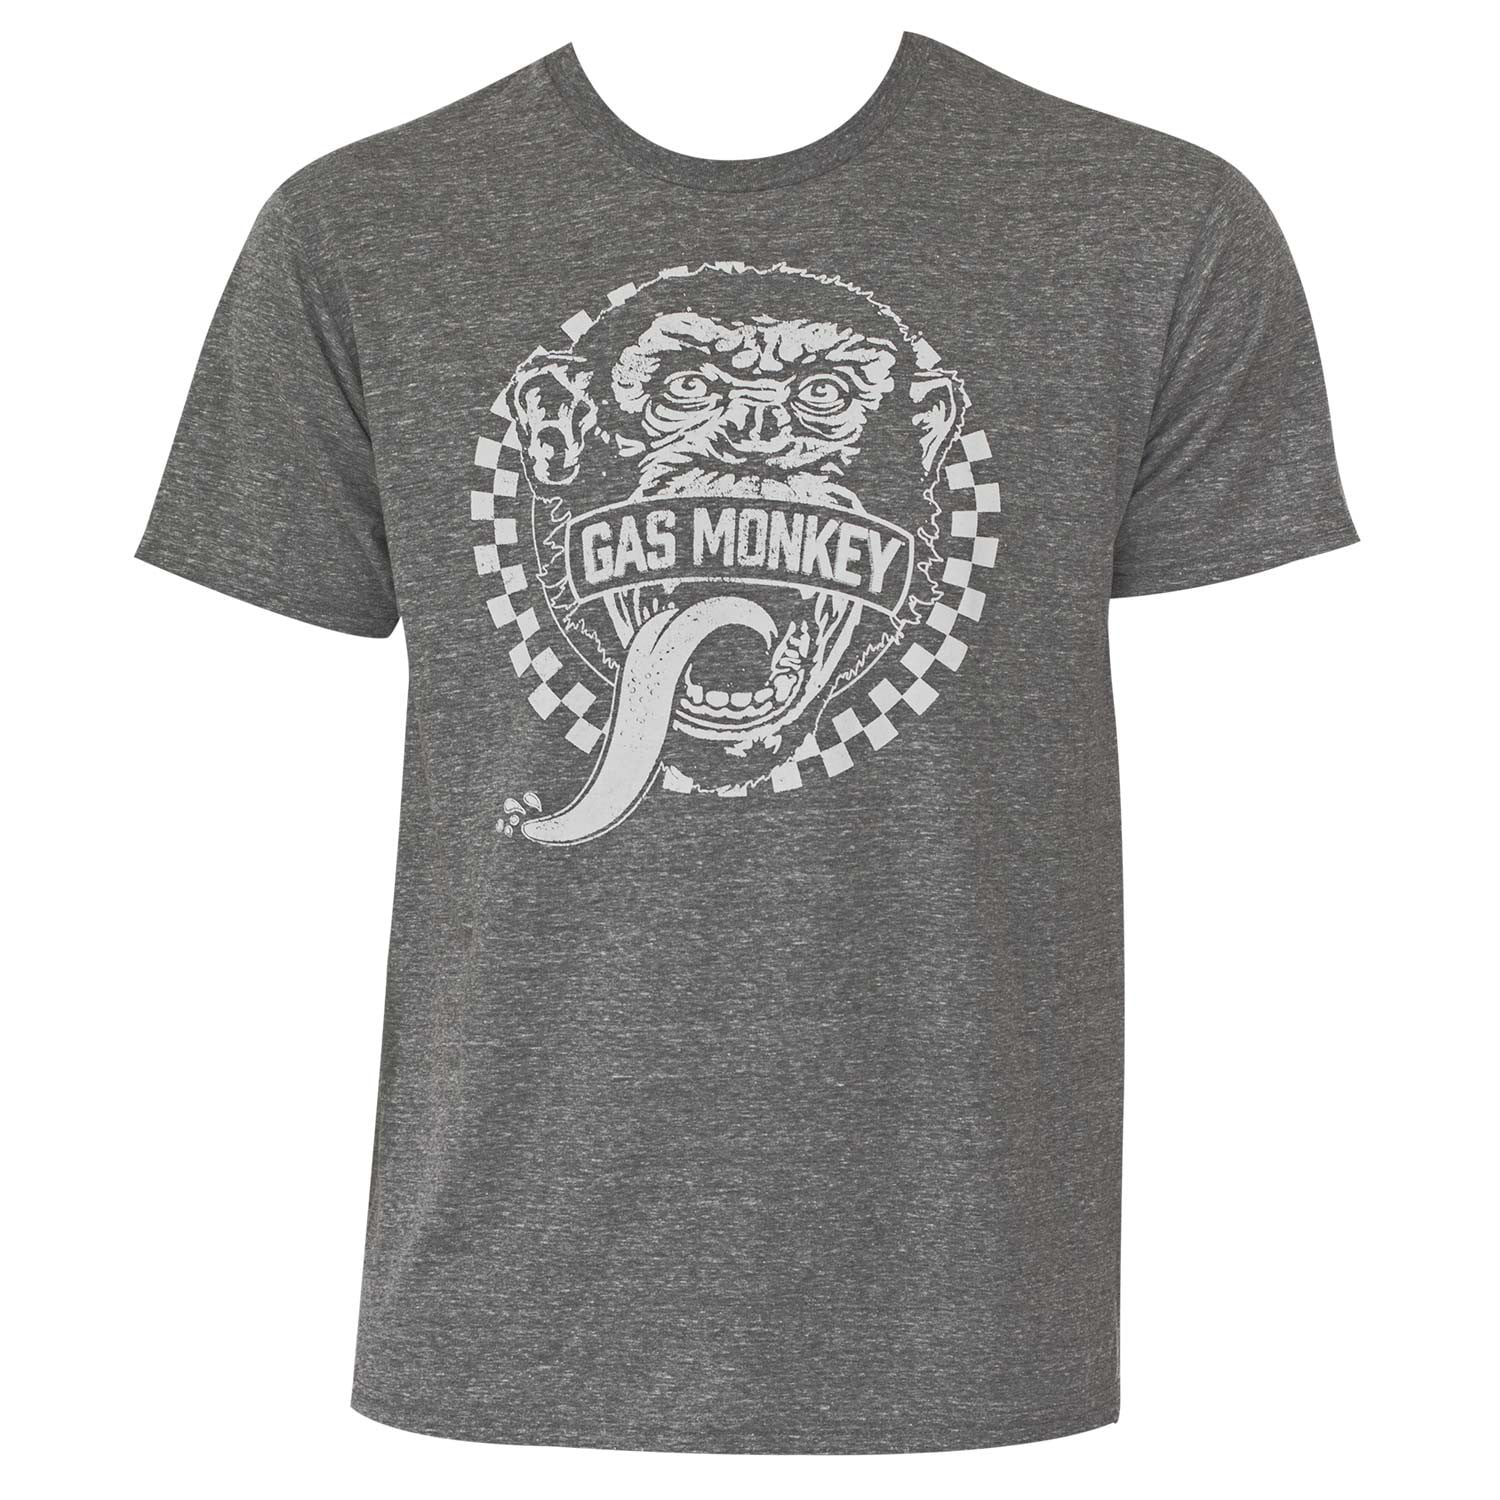 Buy Gas Monkey Heather Grey T-Shirt-Large at Walmart.com. 